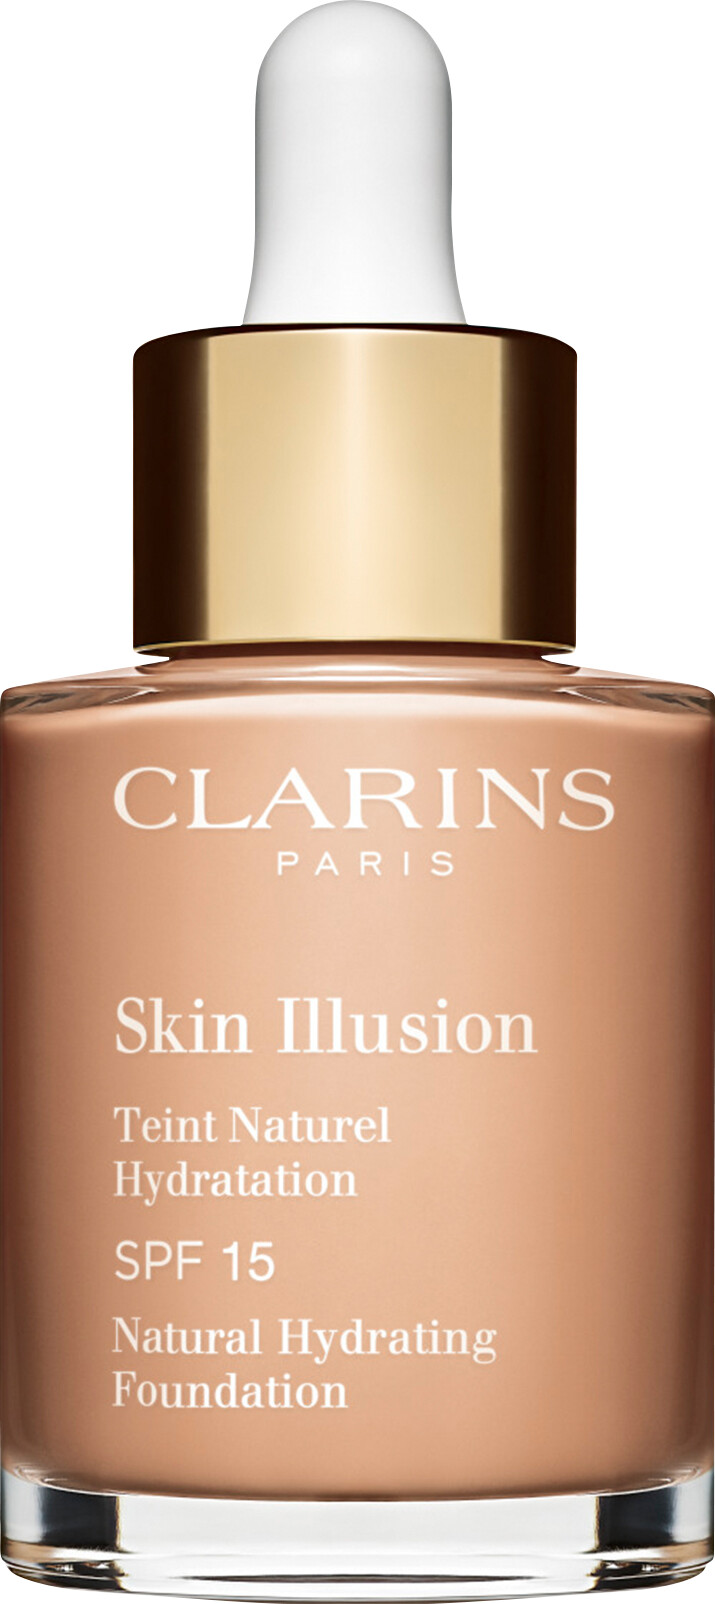 Clarins Skin Illusion Natural Hydrating Foundation SPF15 30ml 107 - Beige